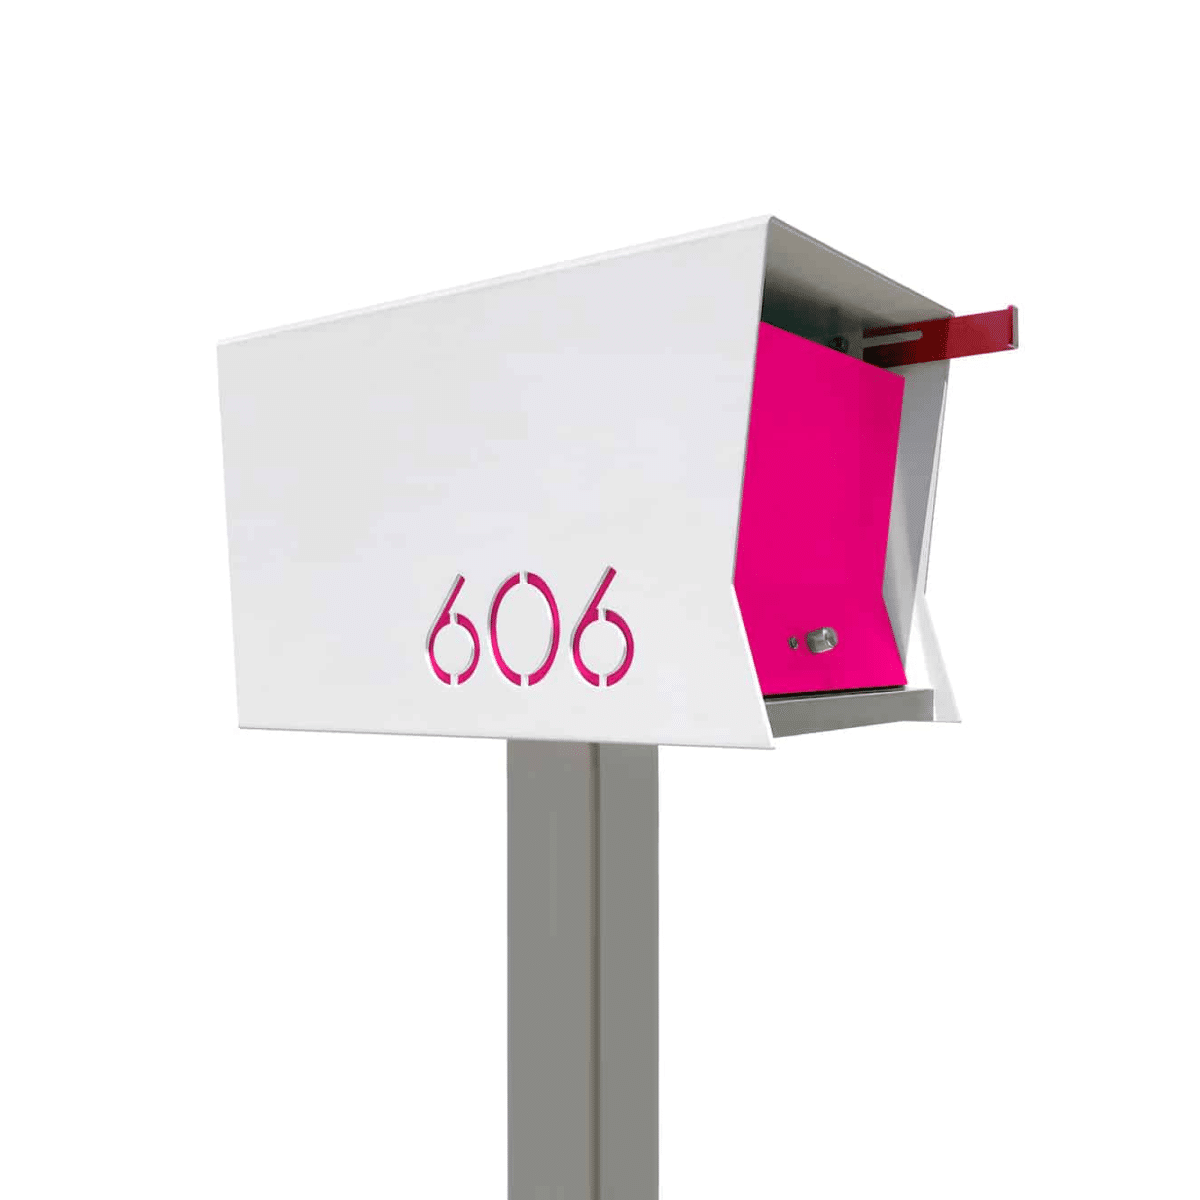 The Original Retrobox in Arctic White – Modern Mailbox Product Image